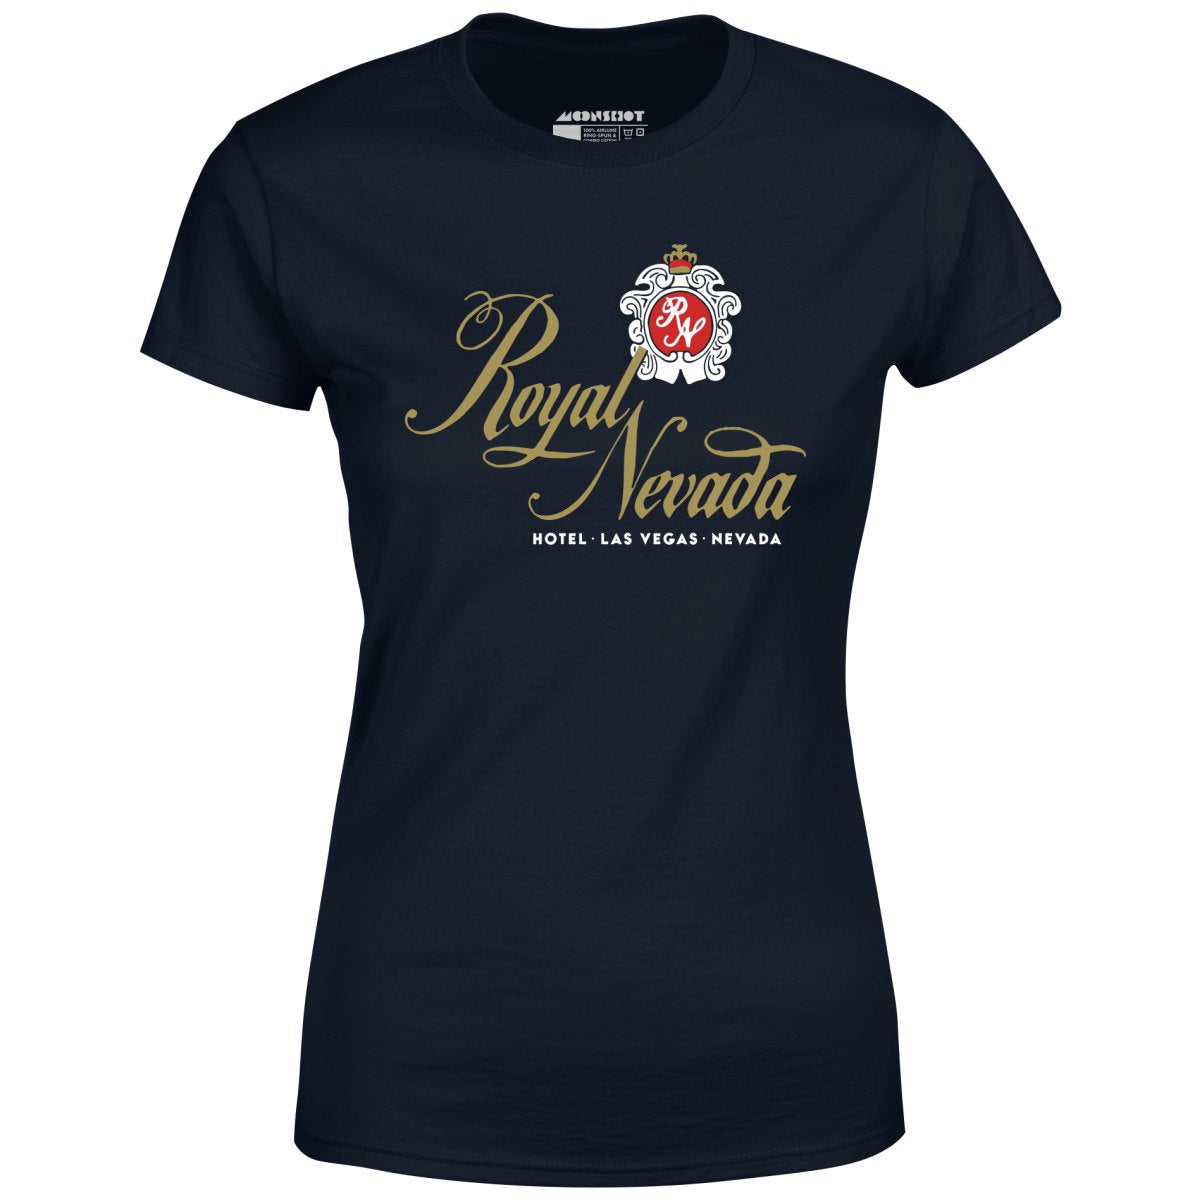 Royal Nevada Hotel & Casino - Vintage Las Vegas - Women's T-Shirt